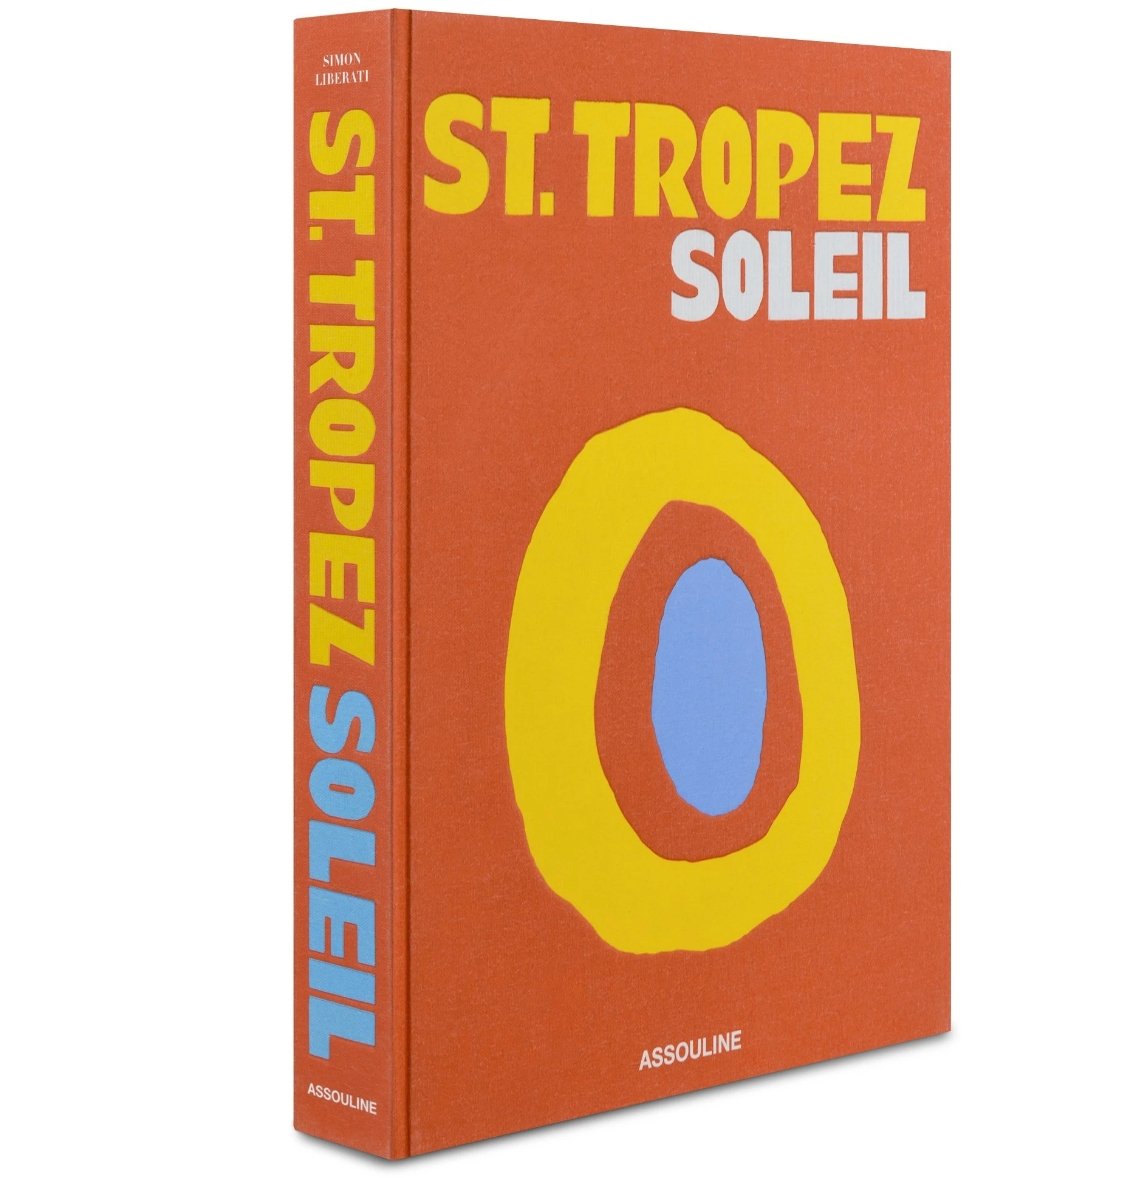 St. Tropez Soleil - Homebody Denver